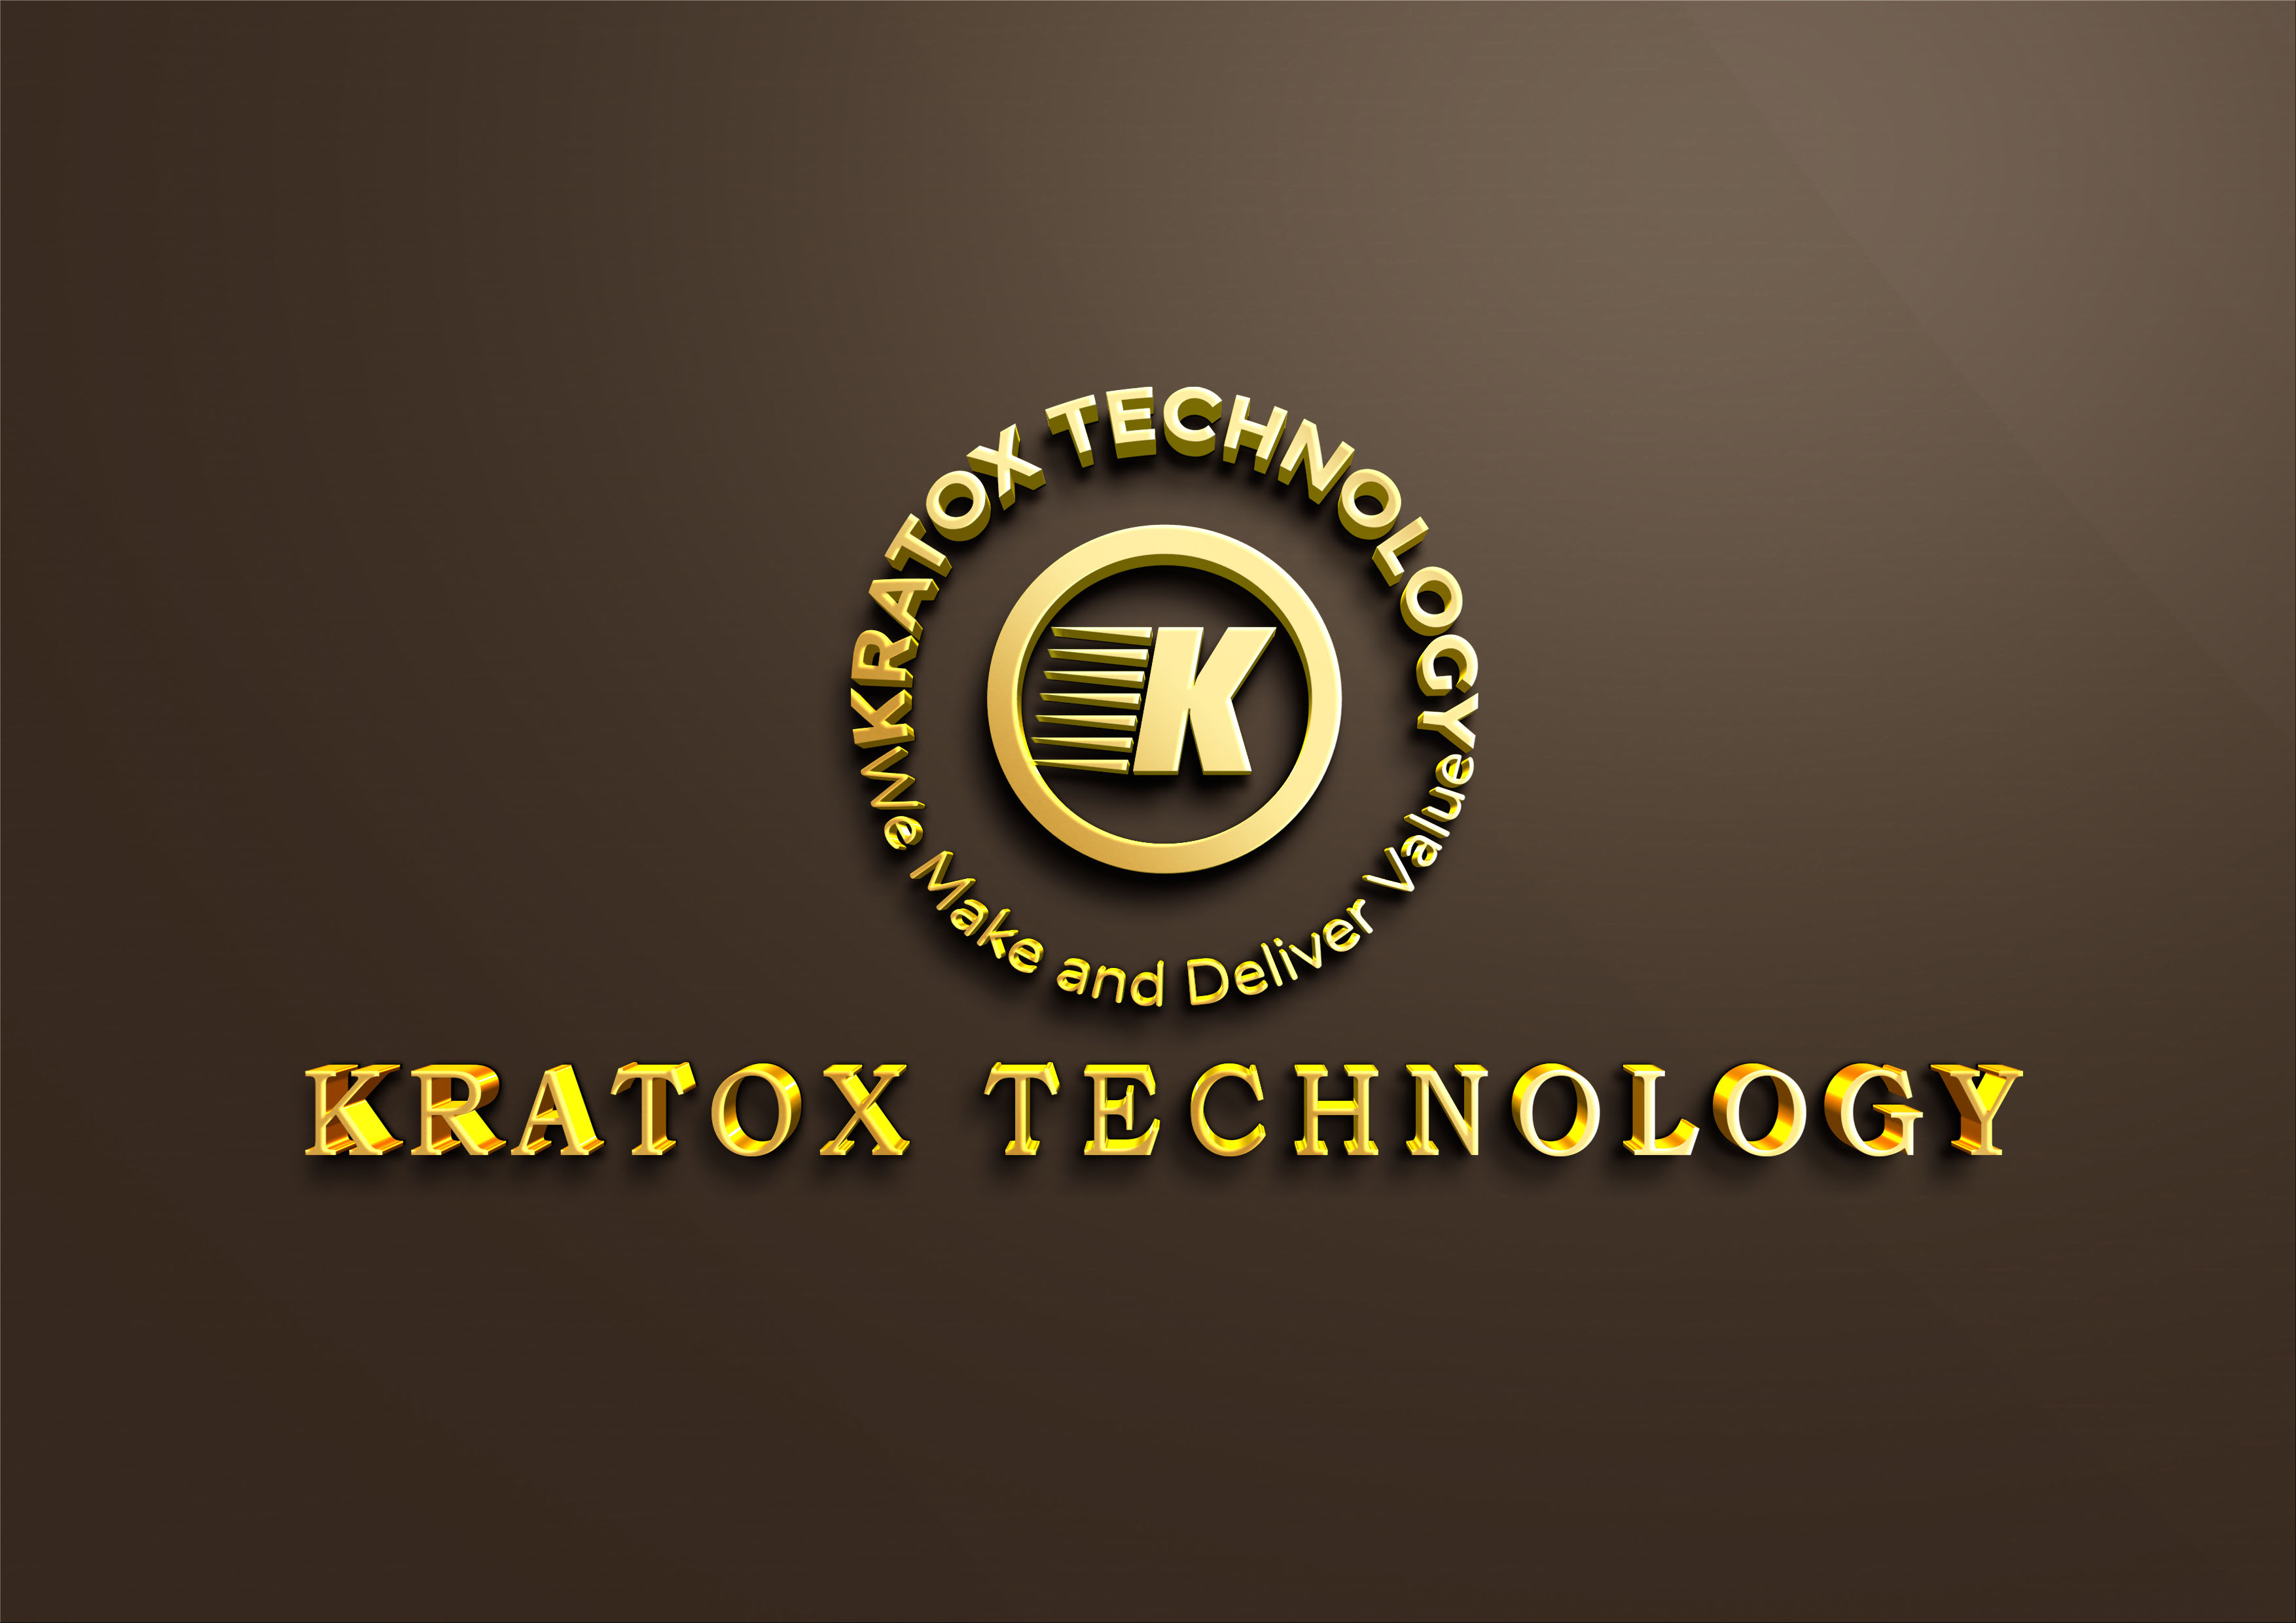 Kratox Technology